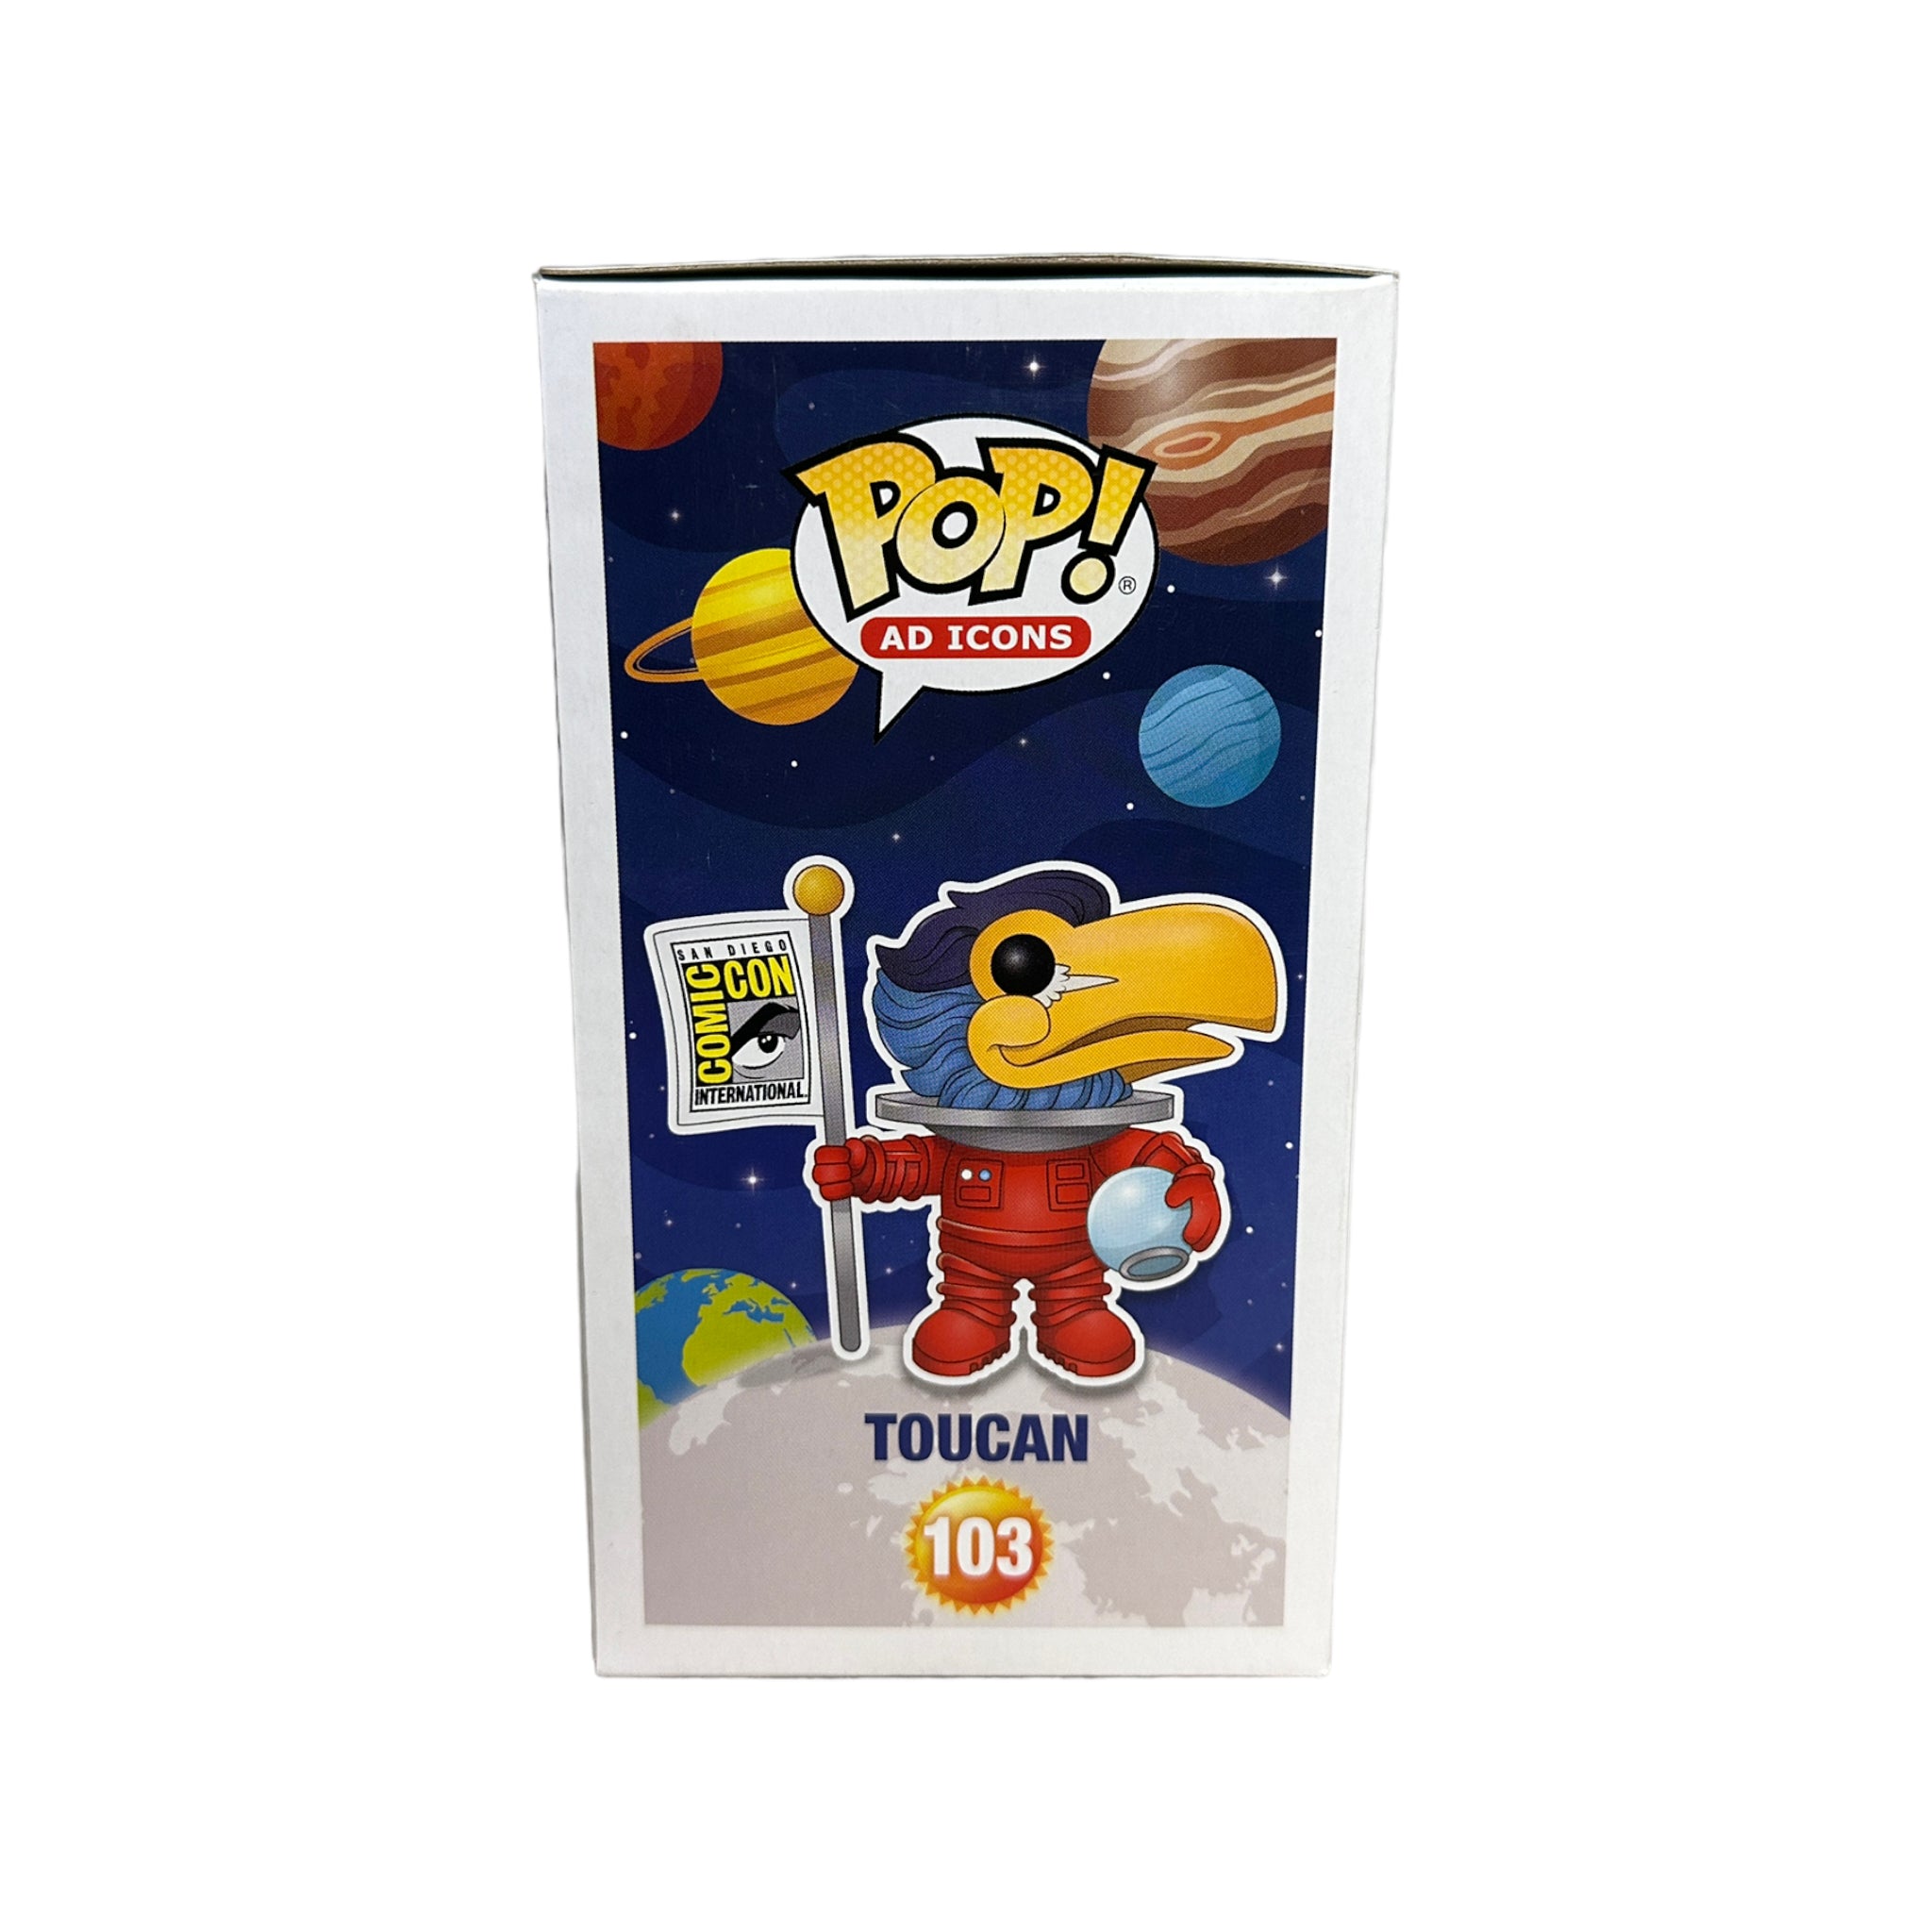 Toucan #103 (Astronaut Red) Funko Pop! - Ad Icons - SDCC 2020 Exclusive LE1000 Pcs - Condition 8/10